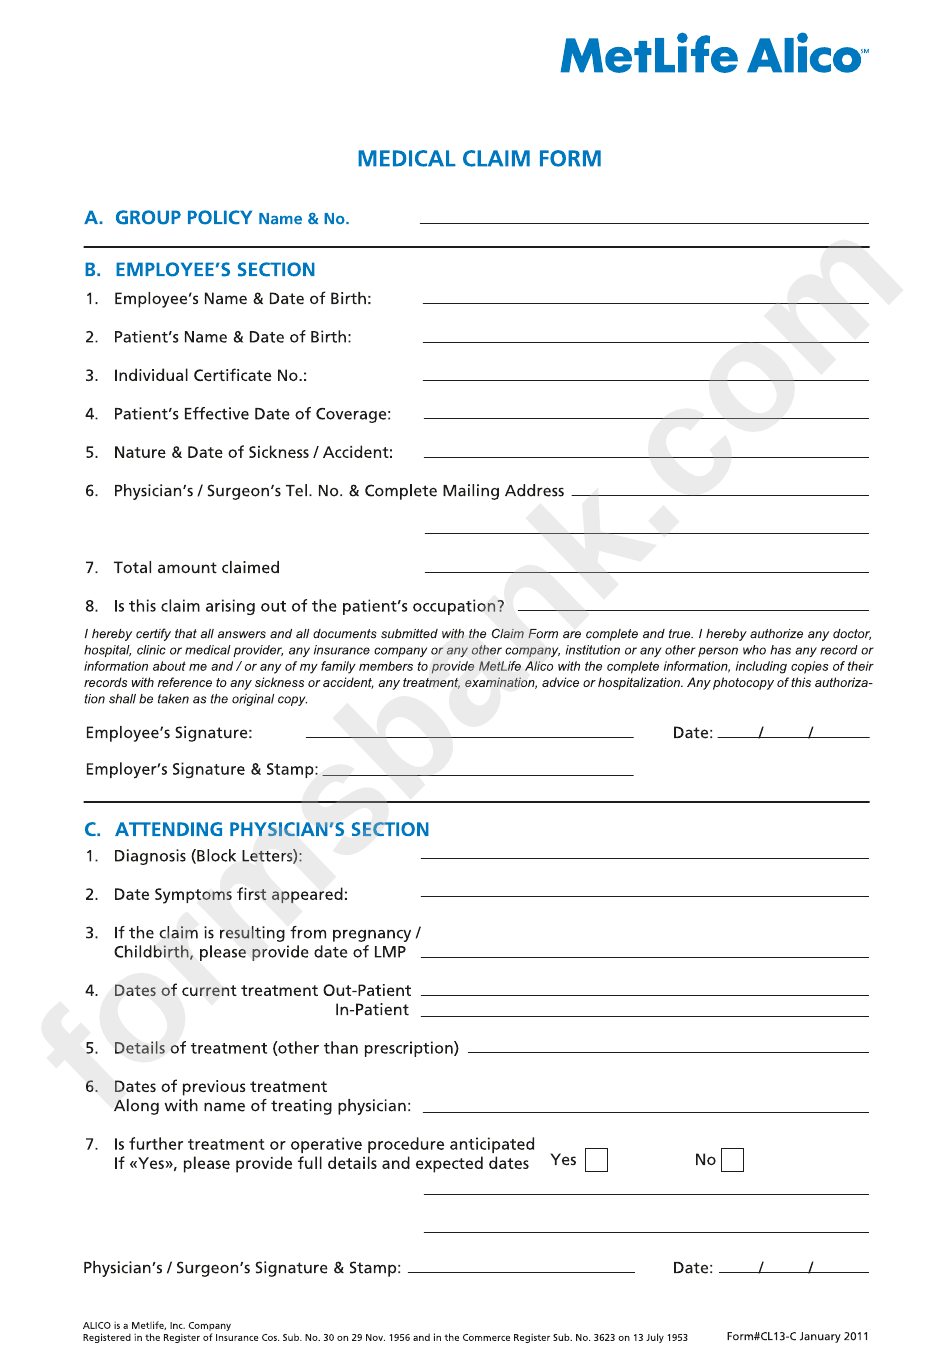 Metlife Alico Medical Claim Form Printable Pdf Download